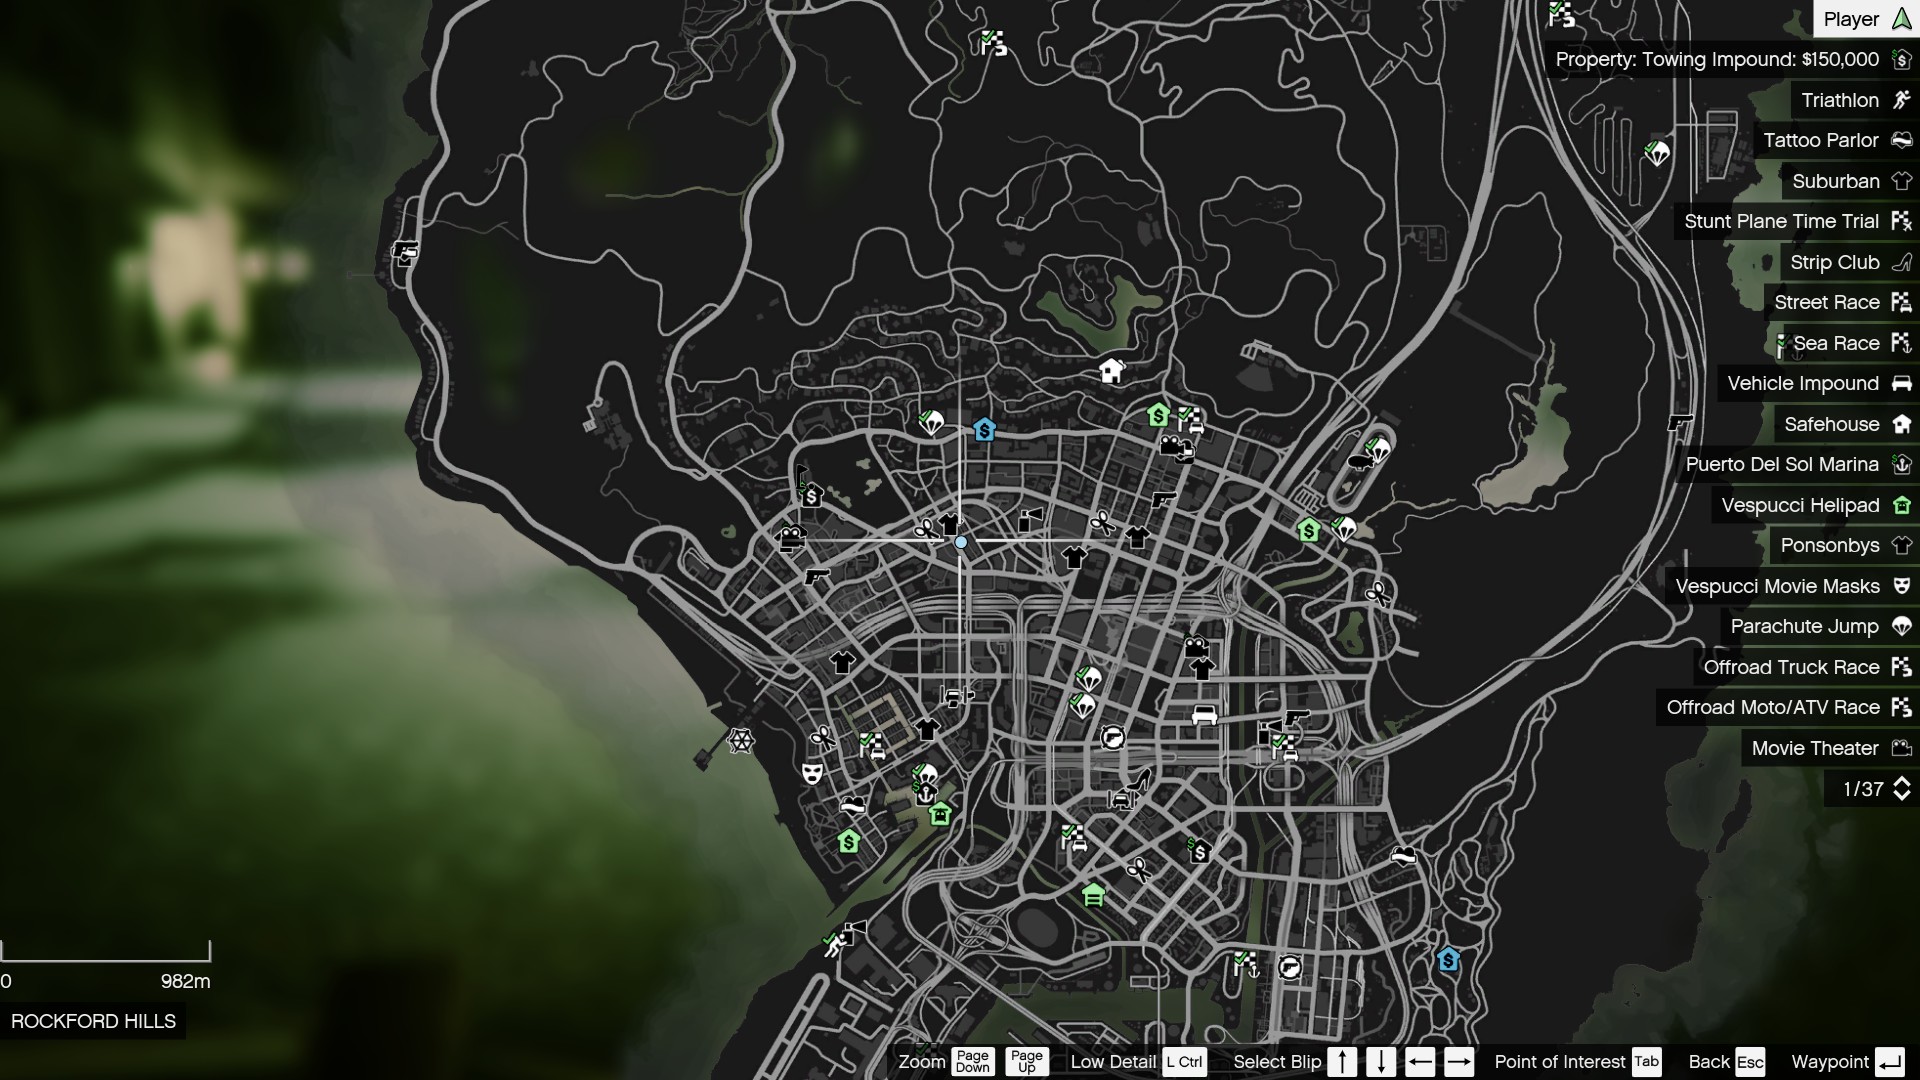 Where is Los Santos located in GTA 5?